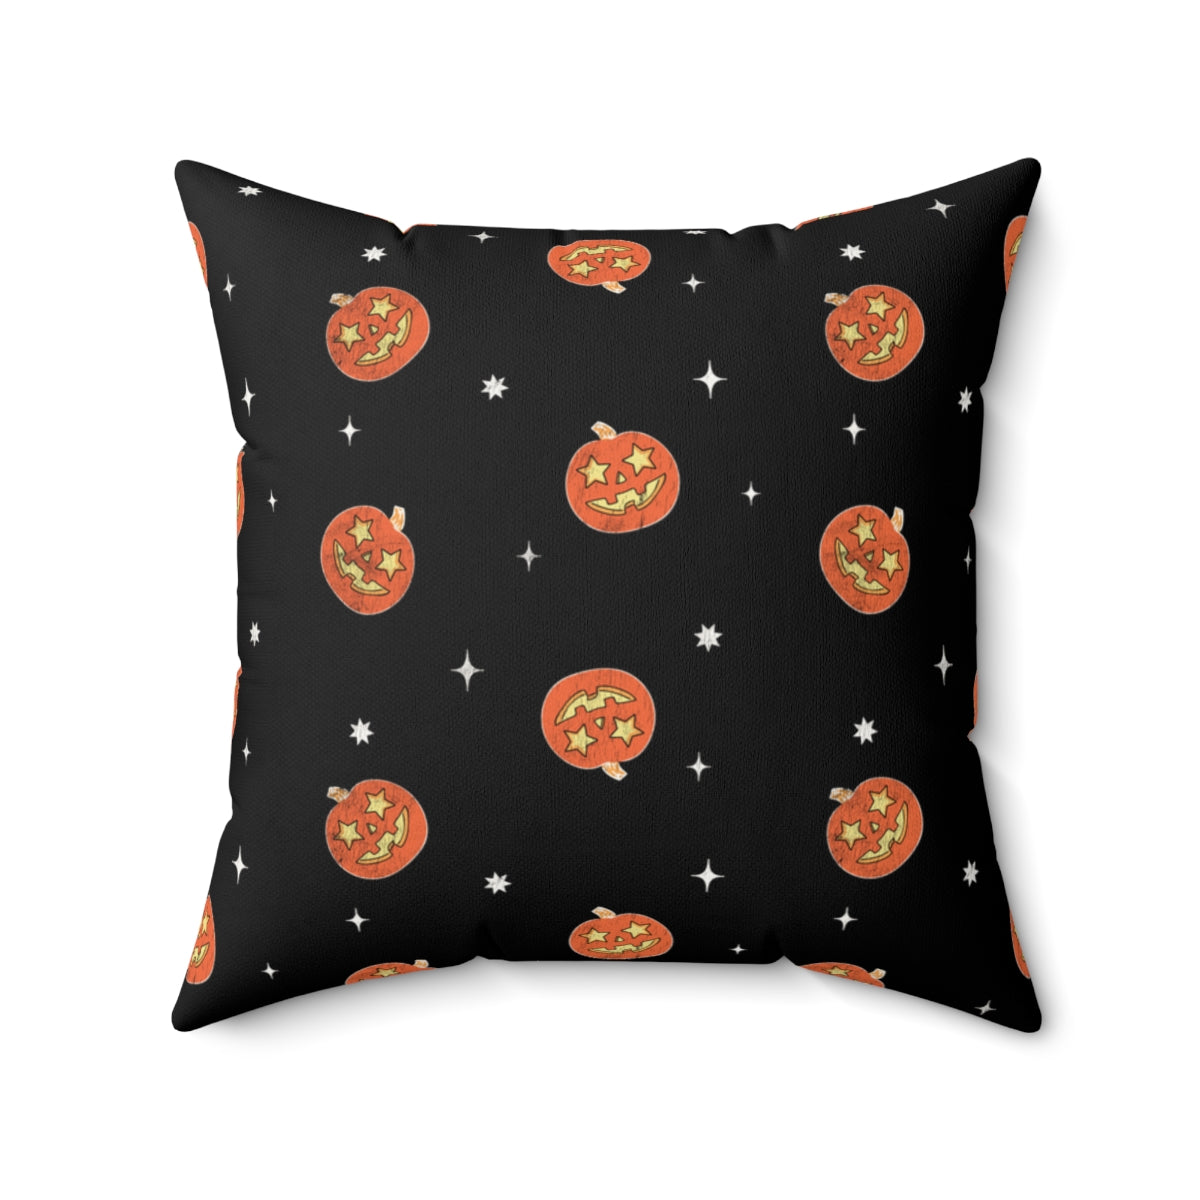 Starry Eyed Jack-o-lantern Ditsy Pillow Cover / Halloween / Black